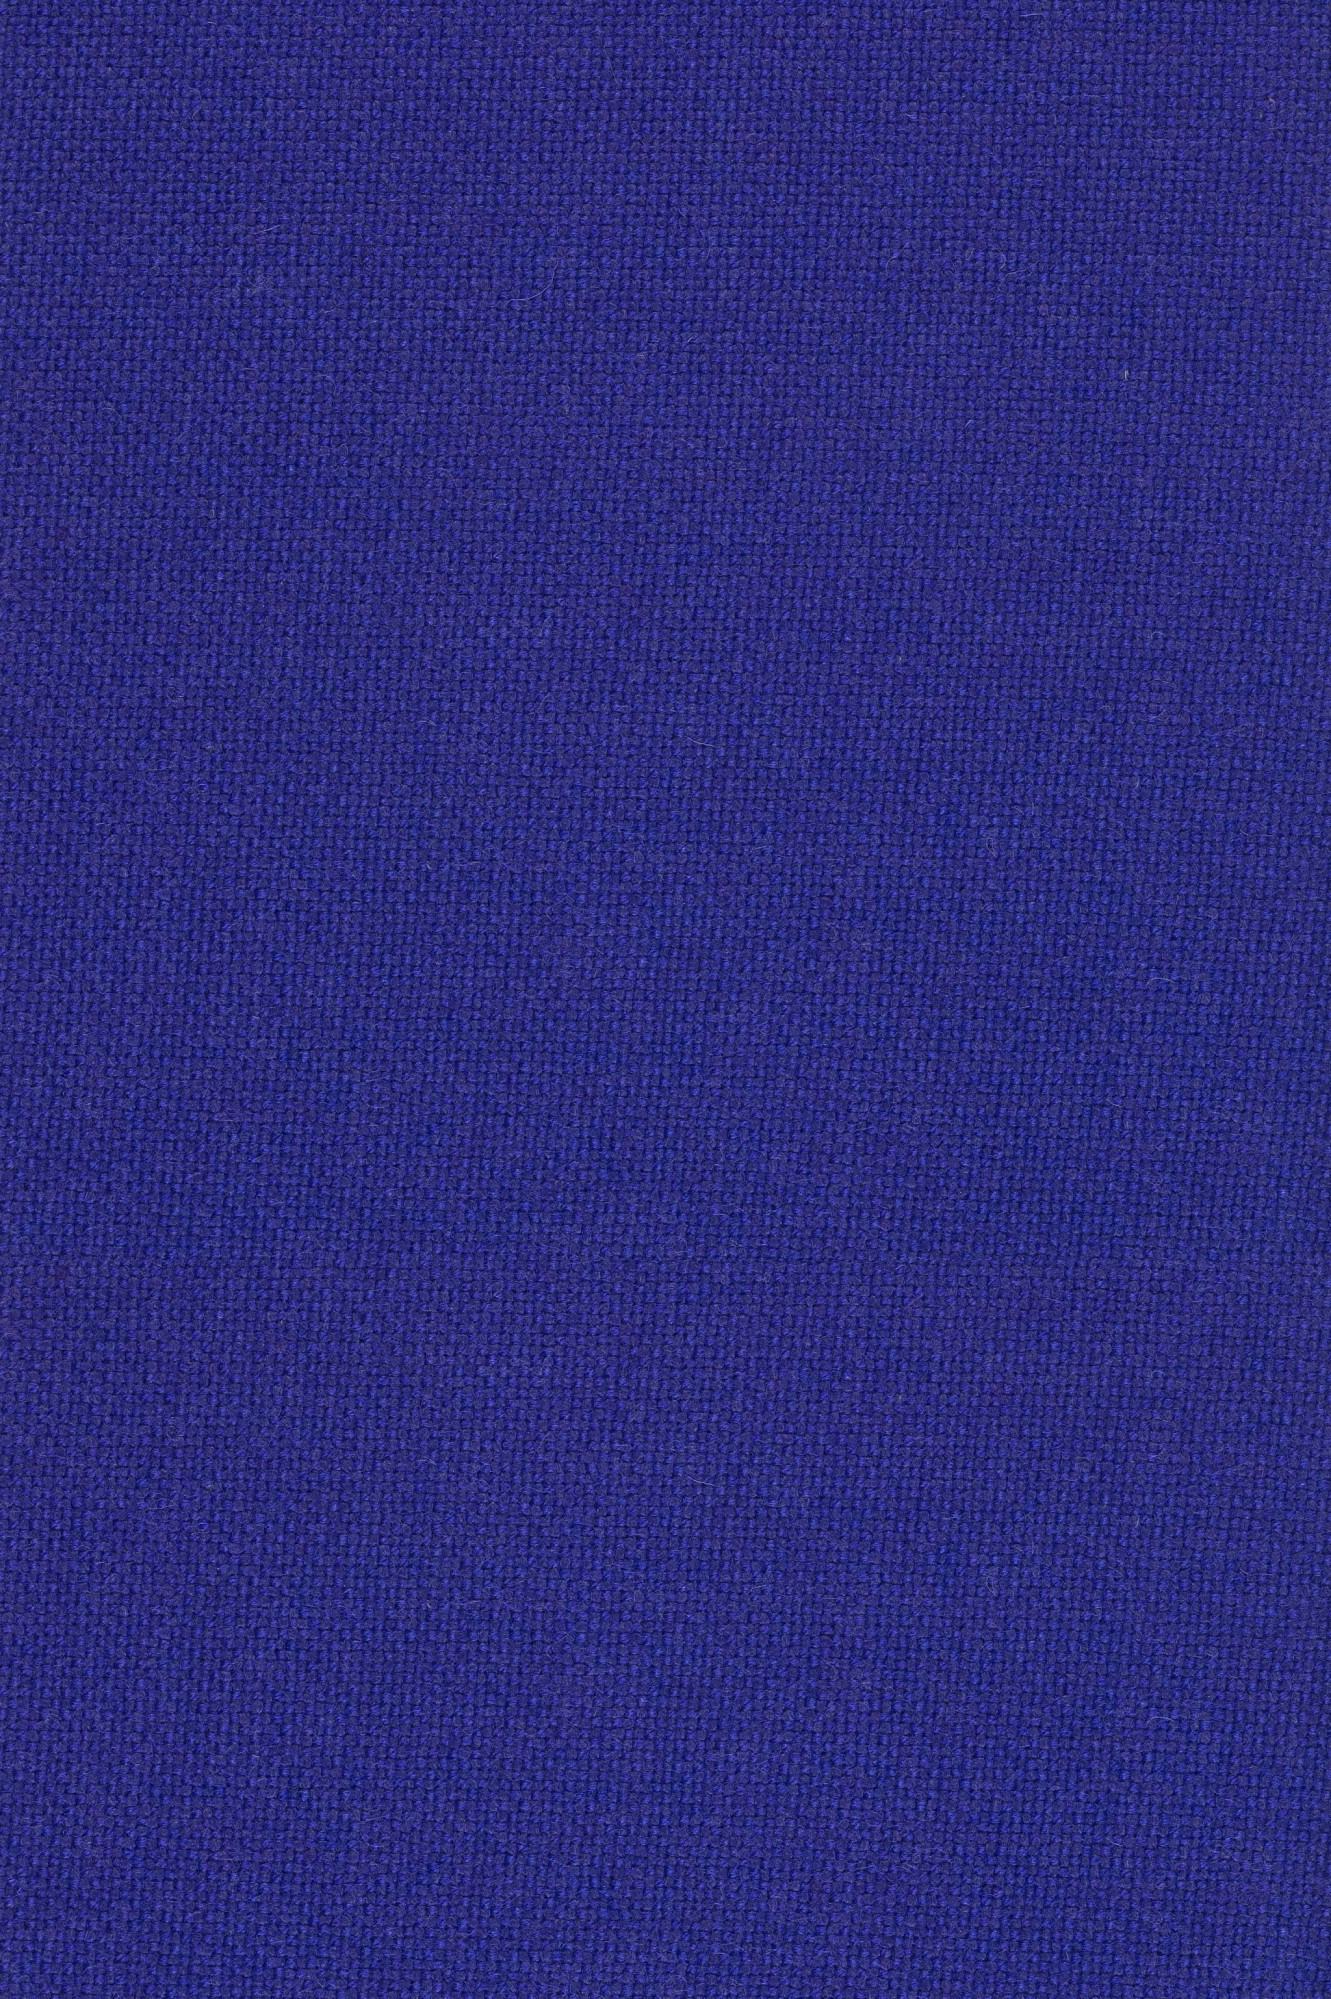 Fabric sample Hallingdal 65 763 blue